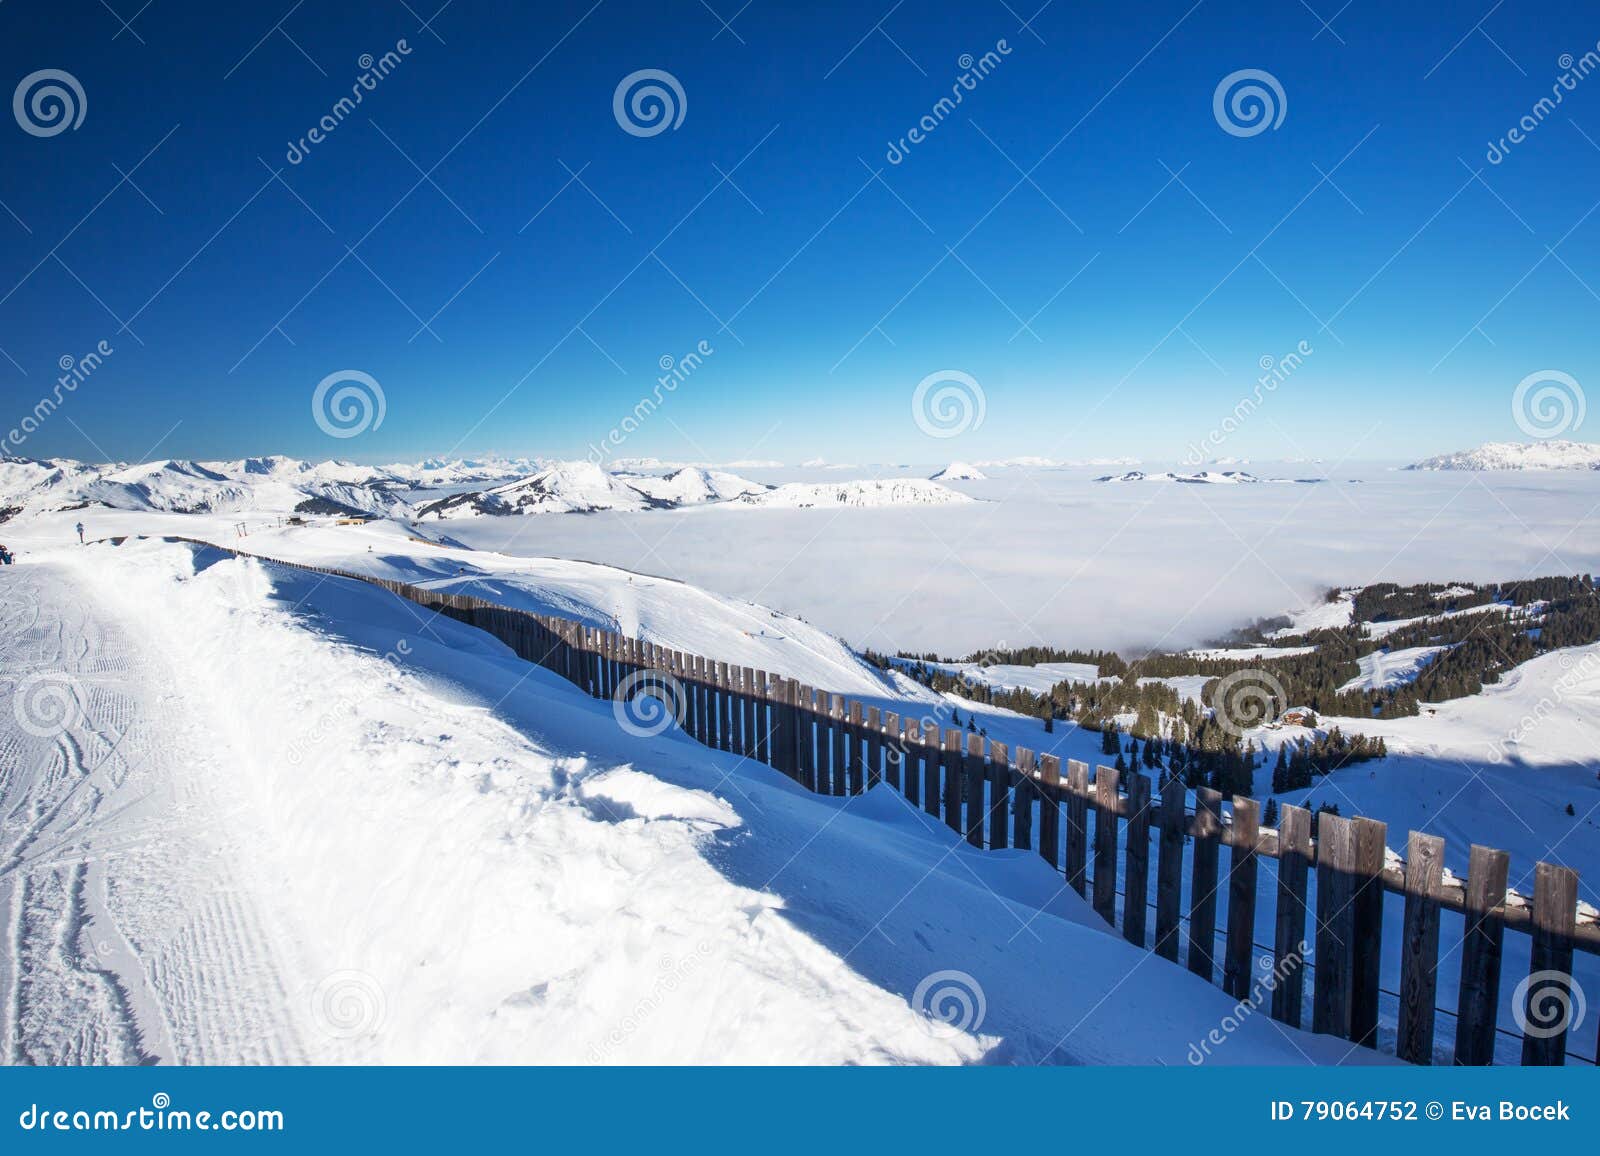 kitzbuehel ski resort in tyrolian alps, austria